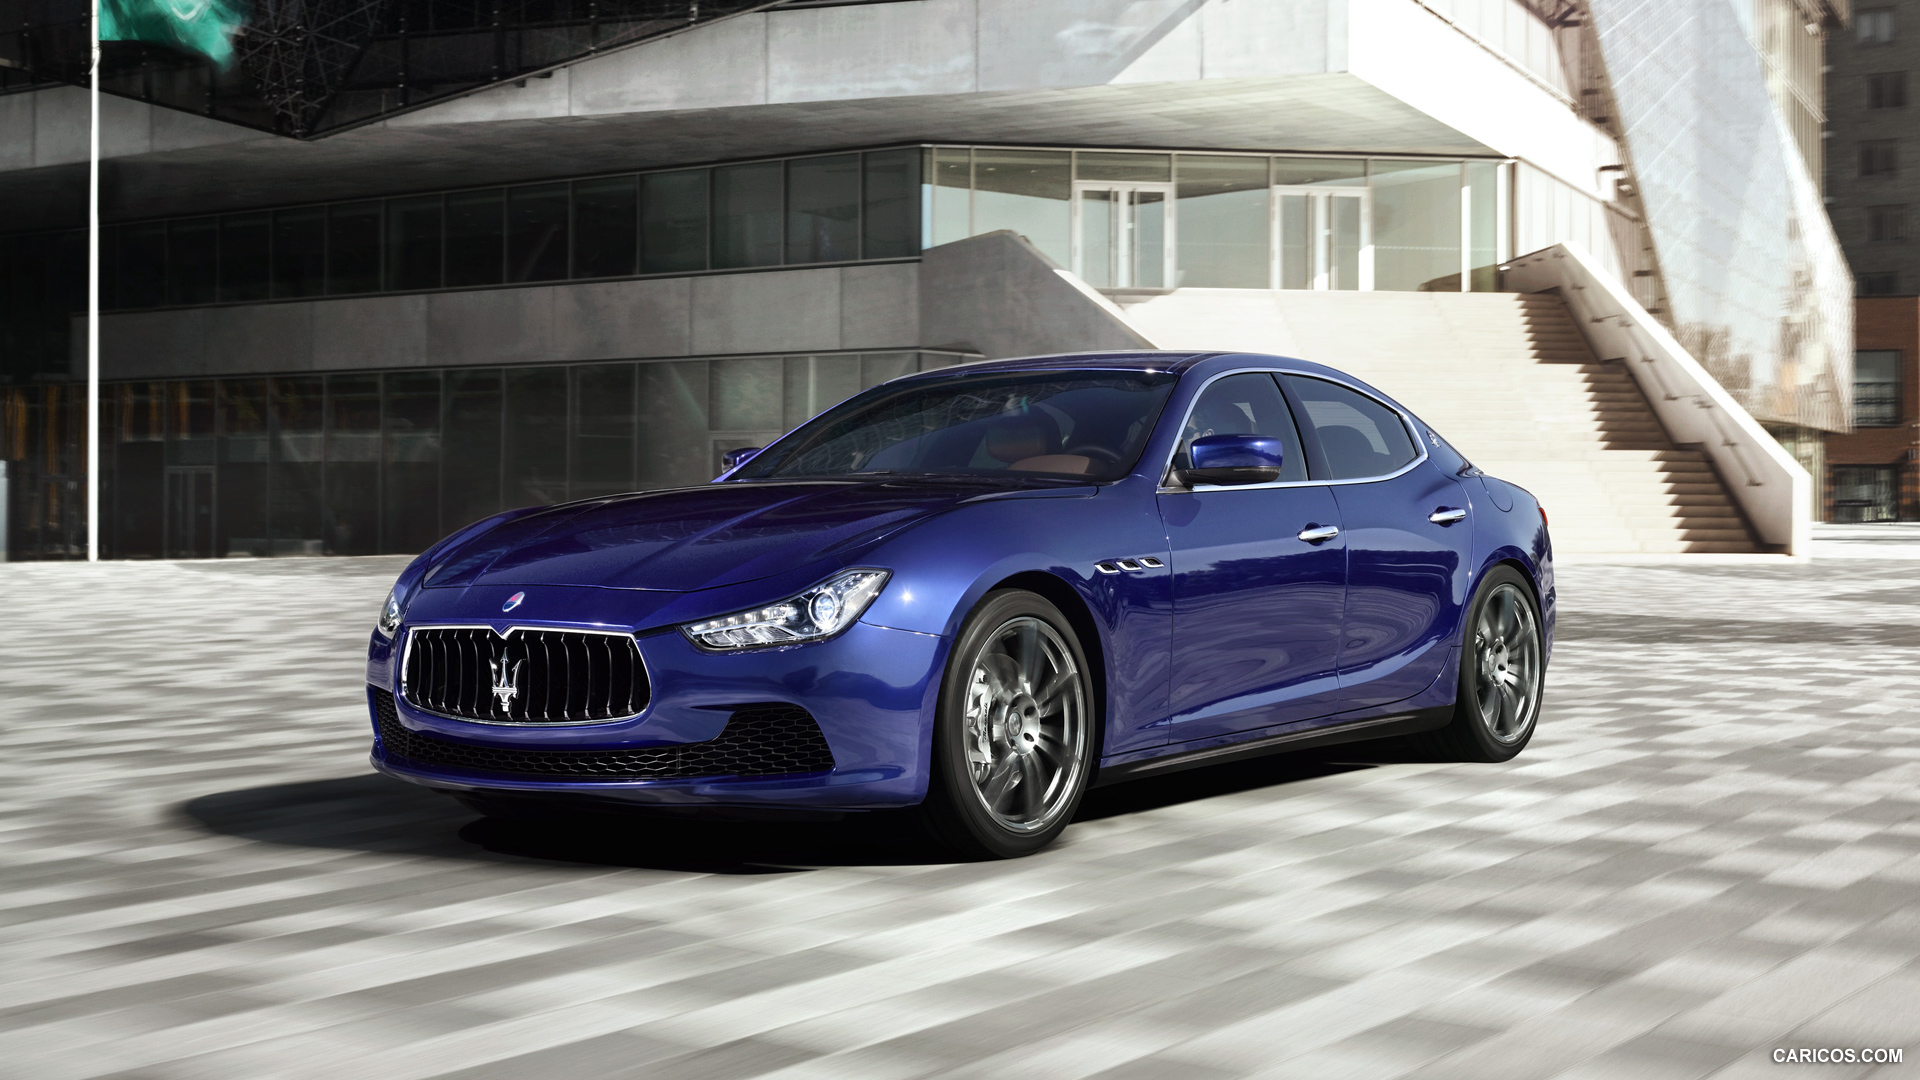 Maserati Ghibli Fast And Furious Wallpaper